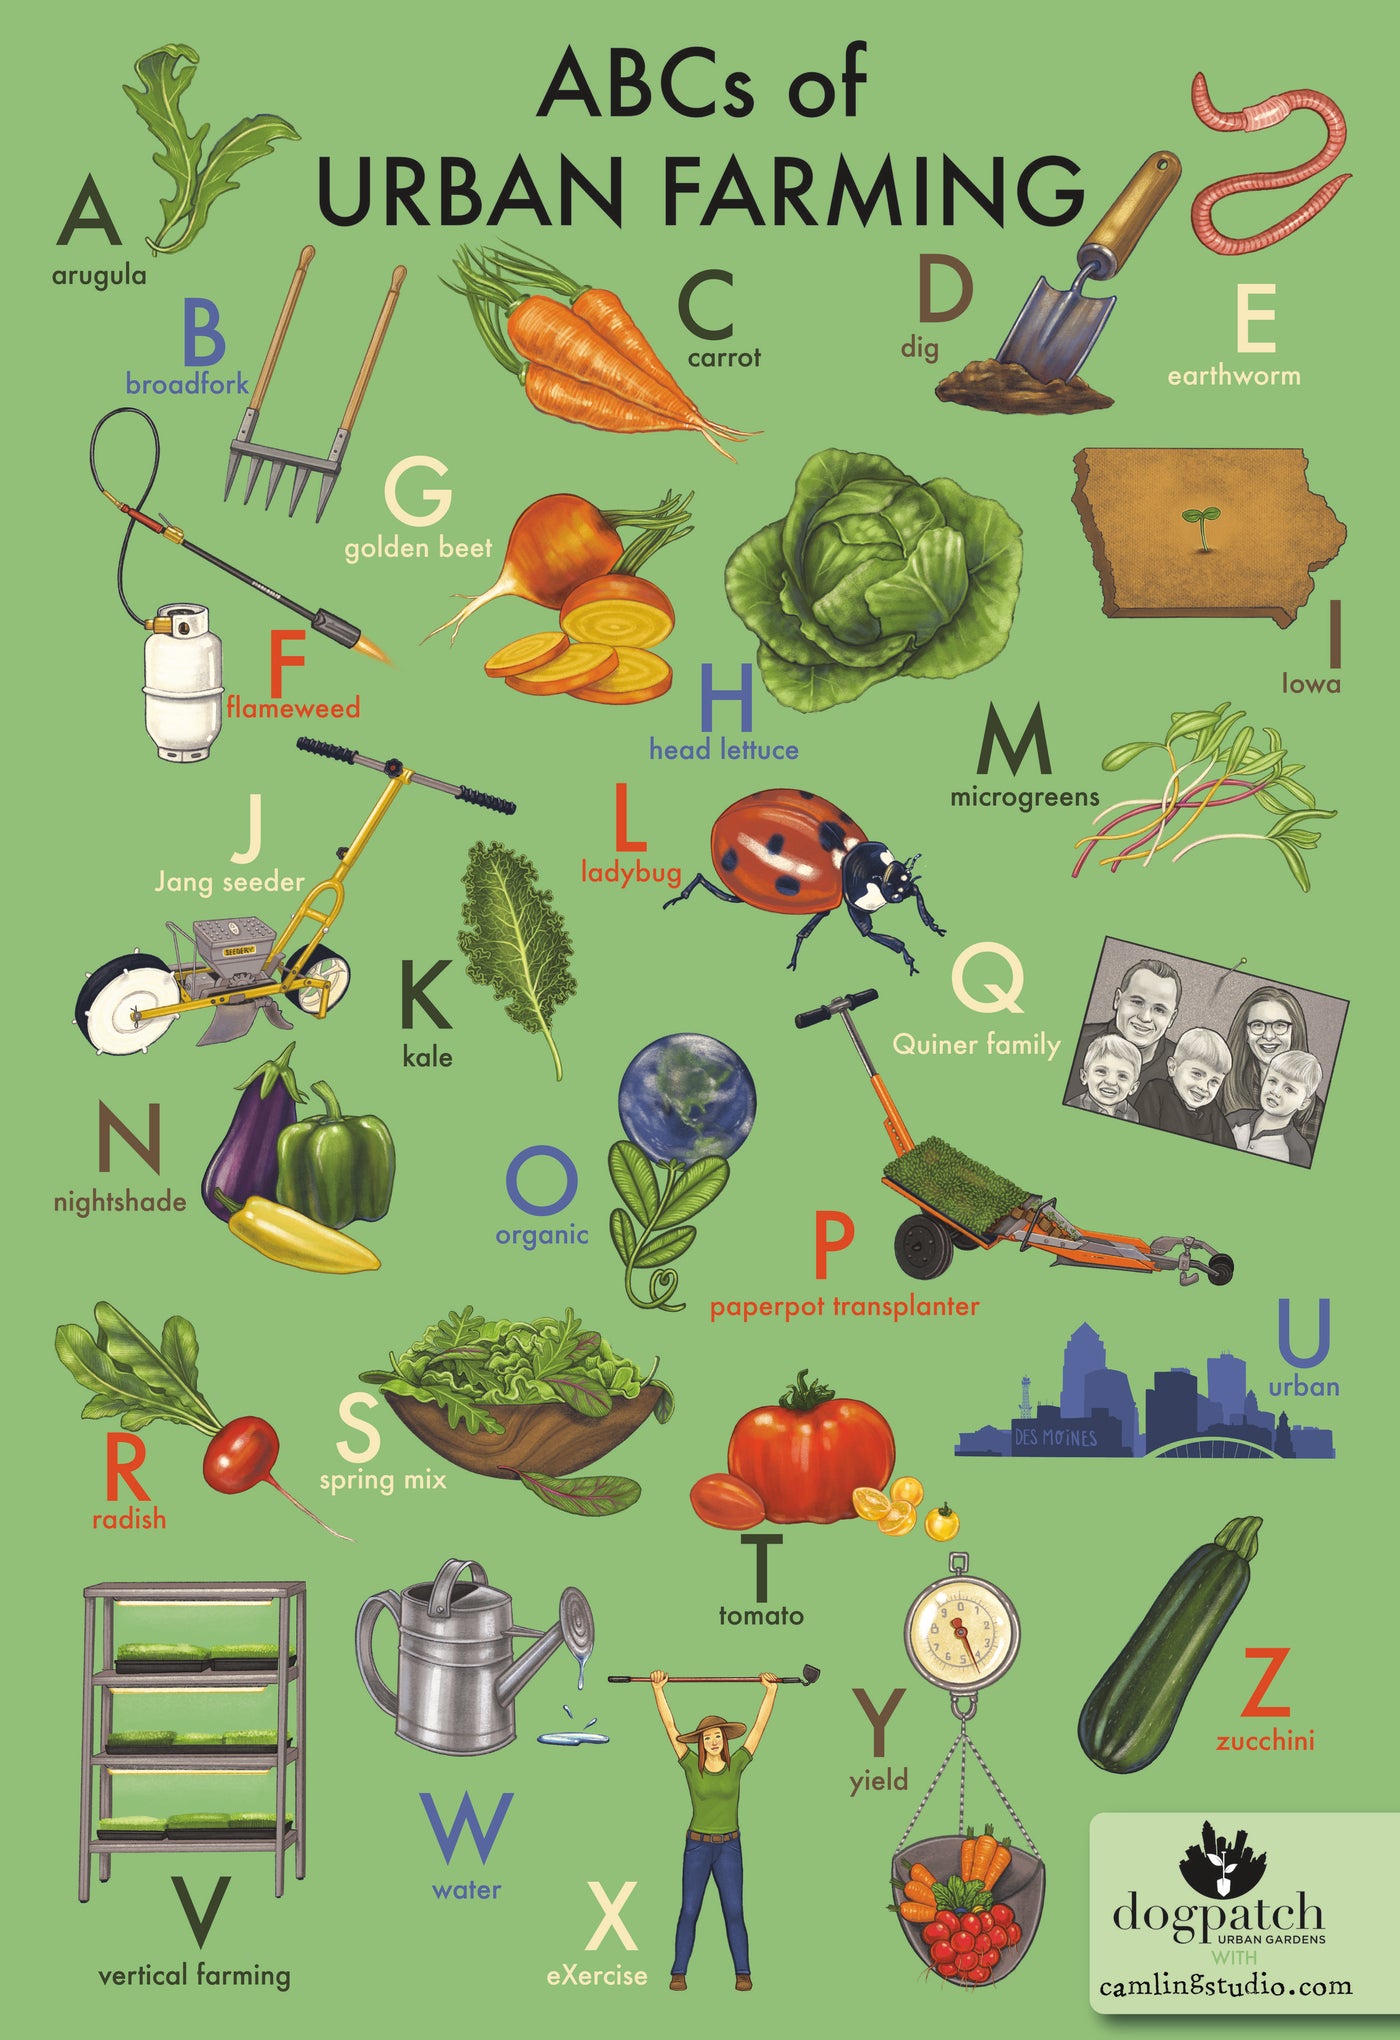 ABC's of Urban Farming Poster